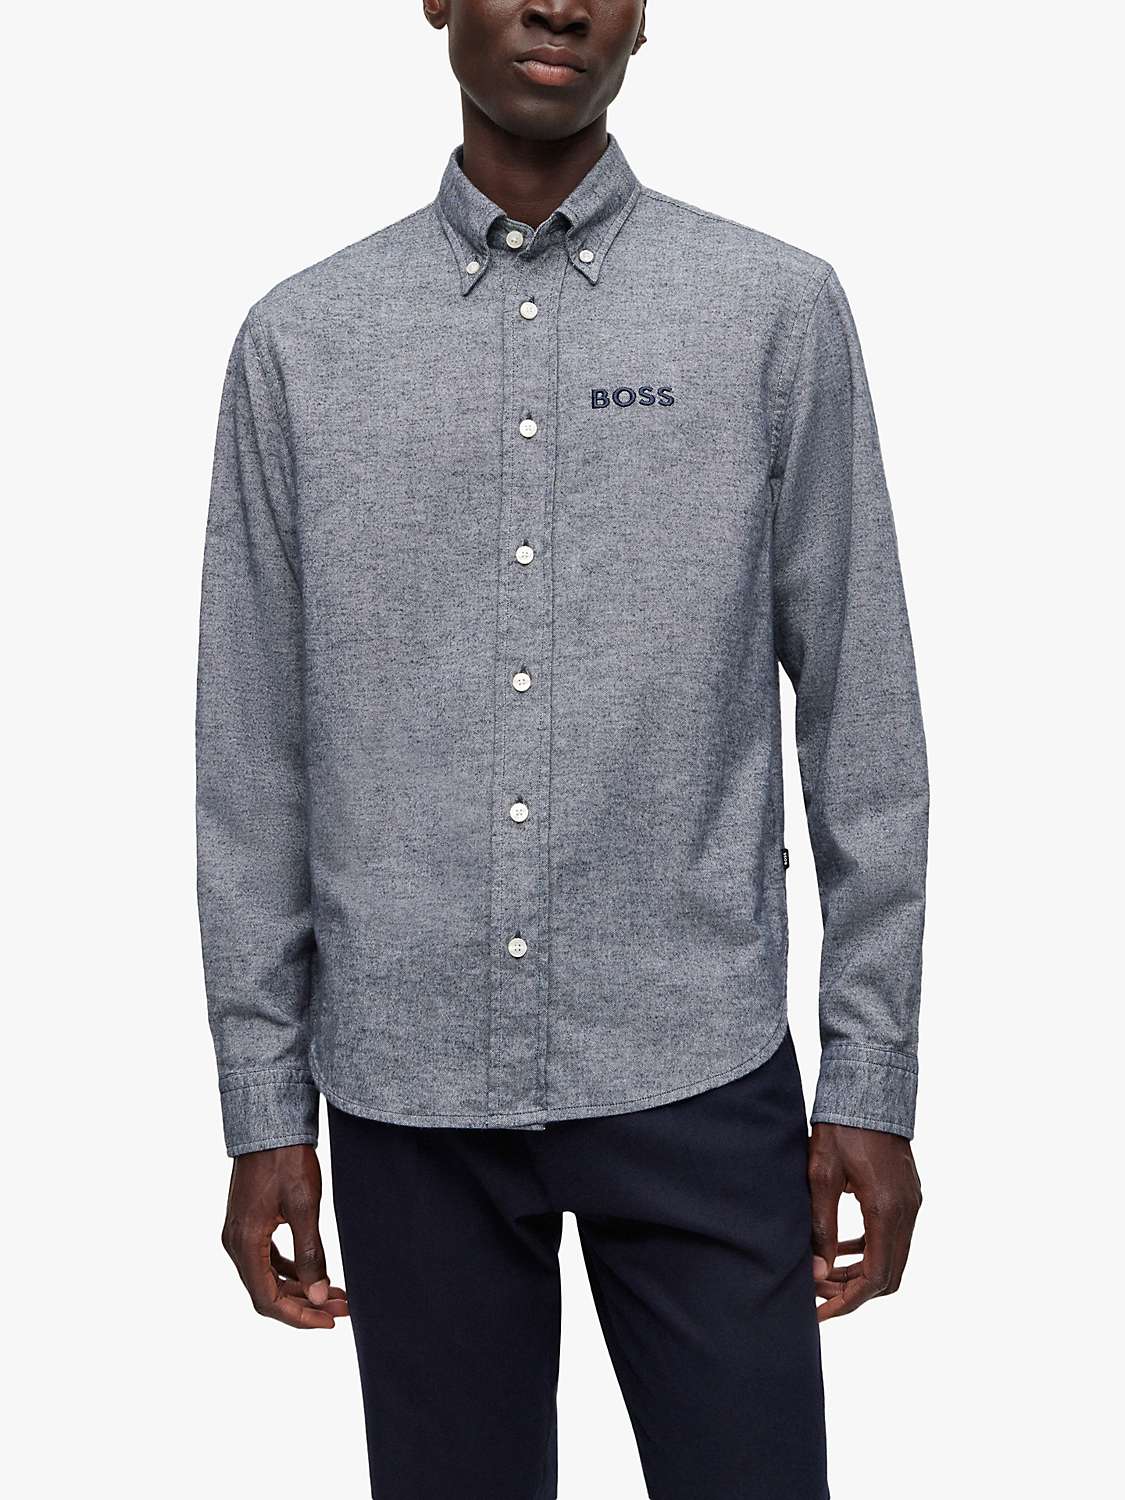 Buy HUGO BOSS Owen Long Sleeve Logo Shirt, Navy Online at johnlewis.com